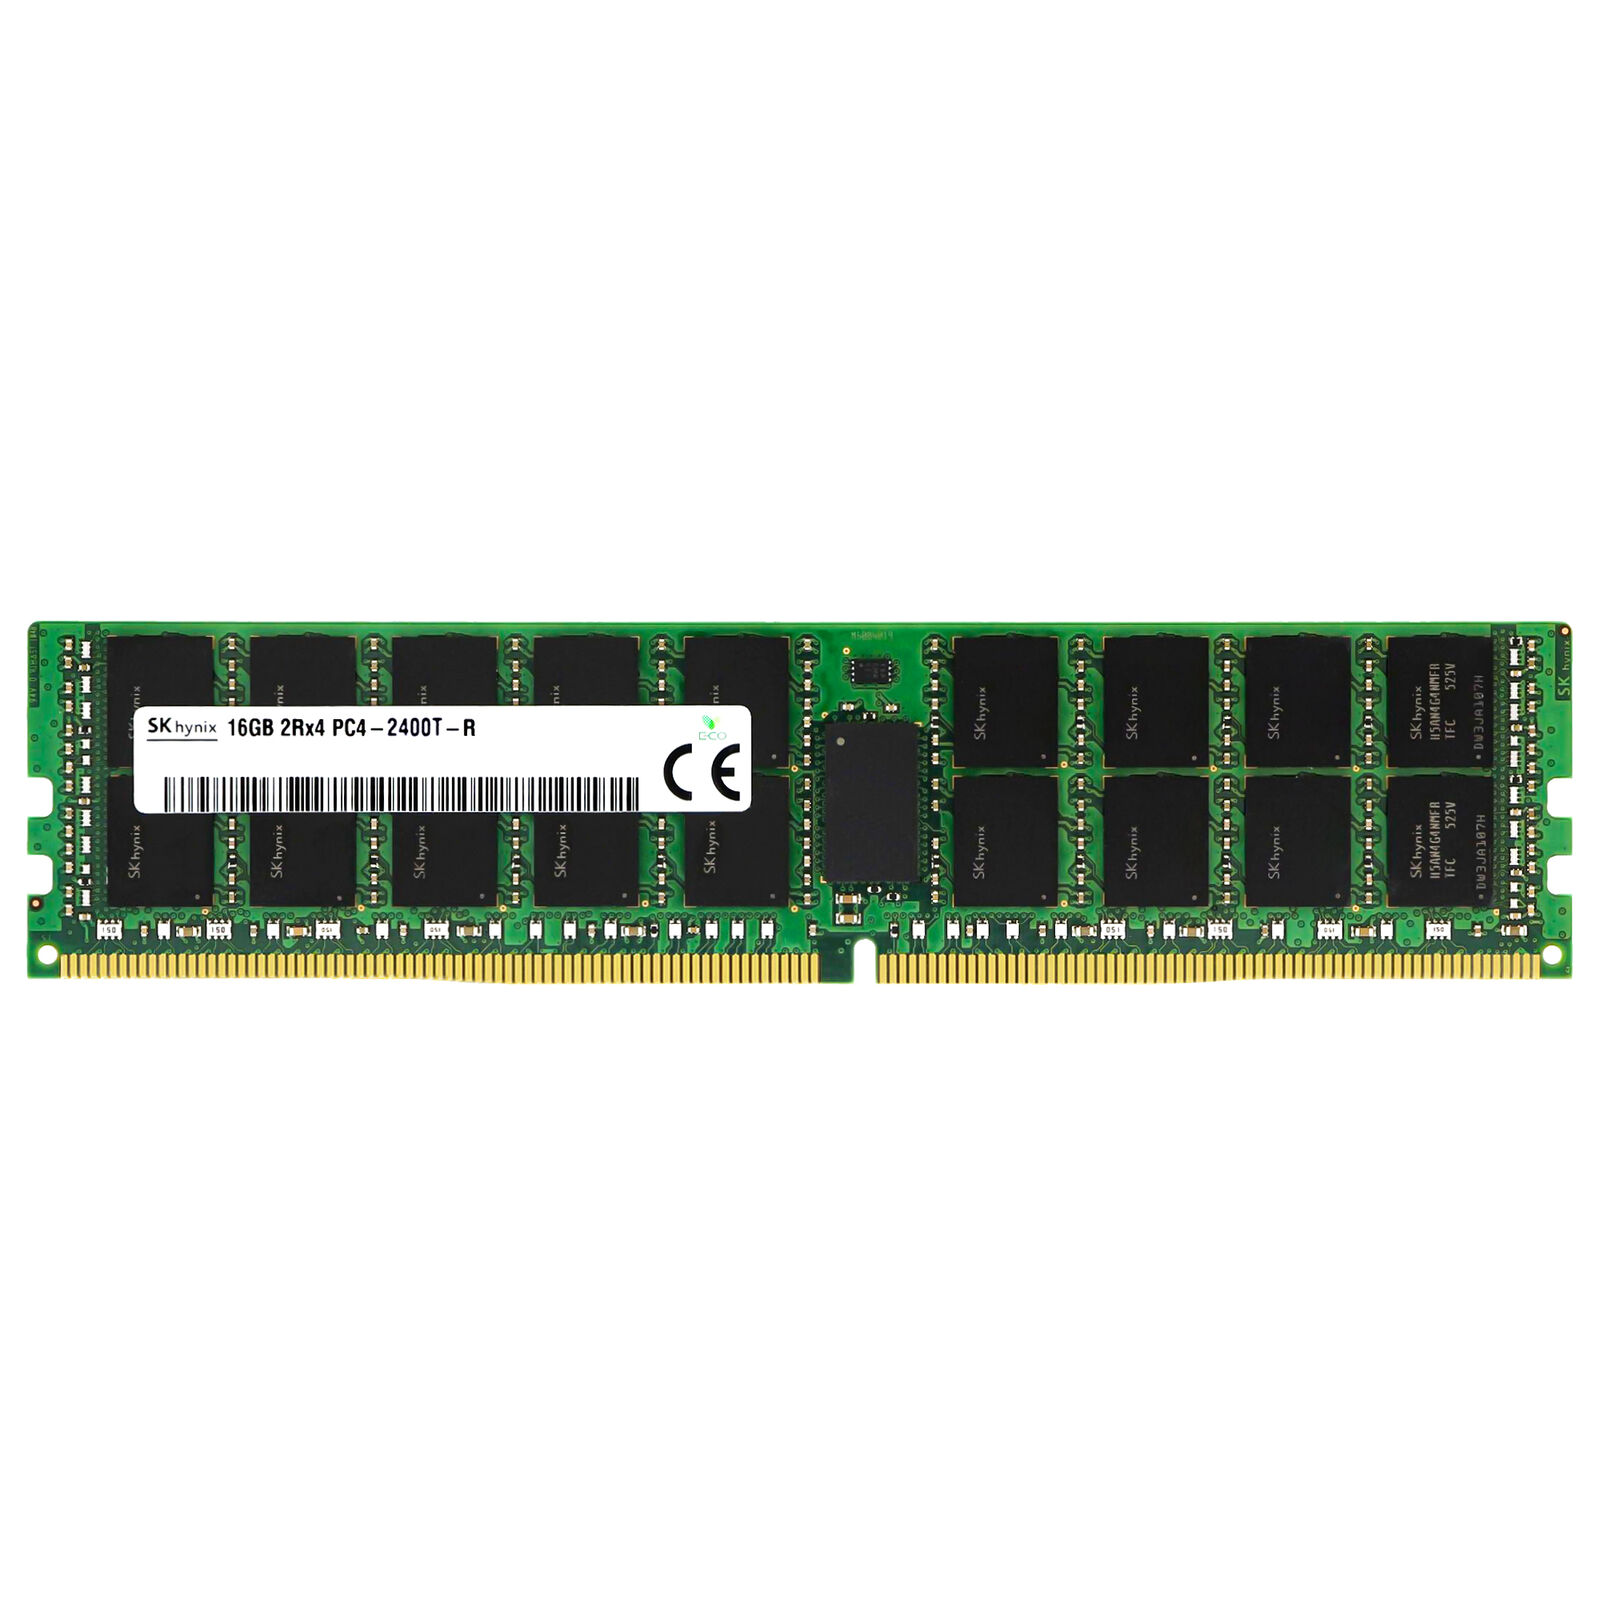 Hynix 16GB 2Rx4 PC4-2400T RDIMM DDR4-19200 ECC REG Registered Server Memory RAM